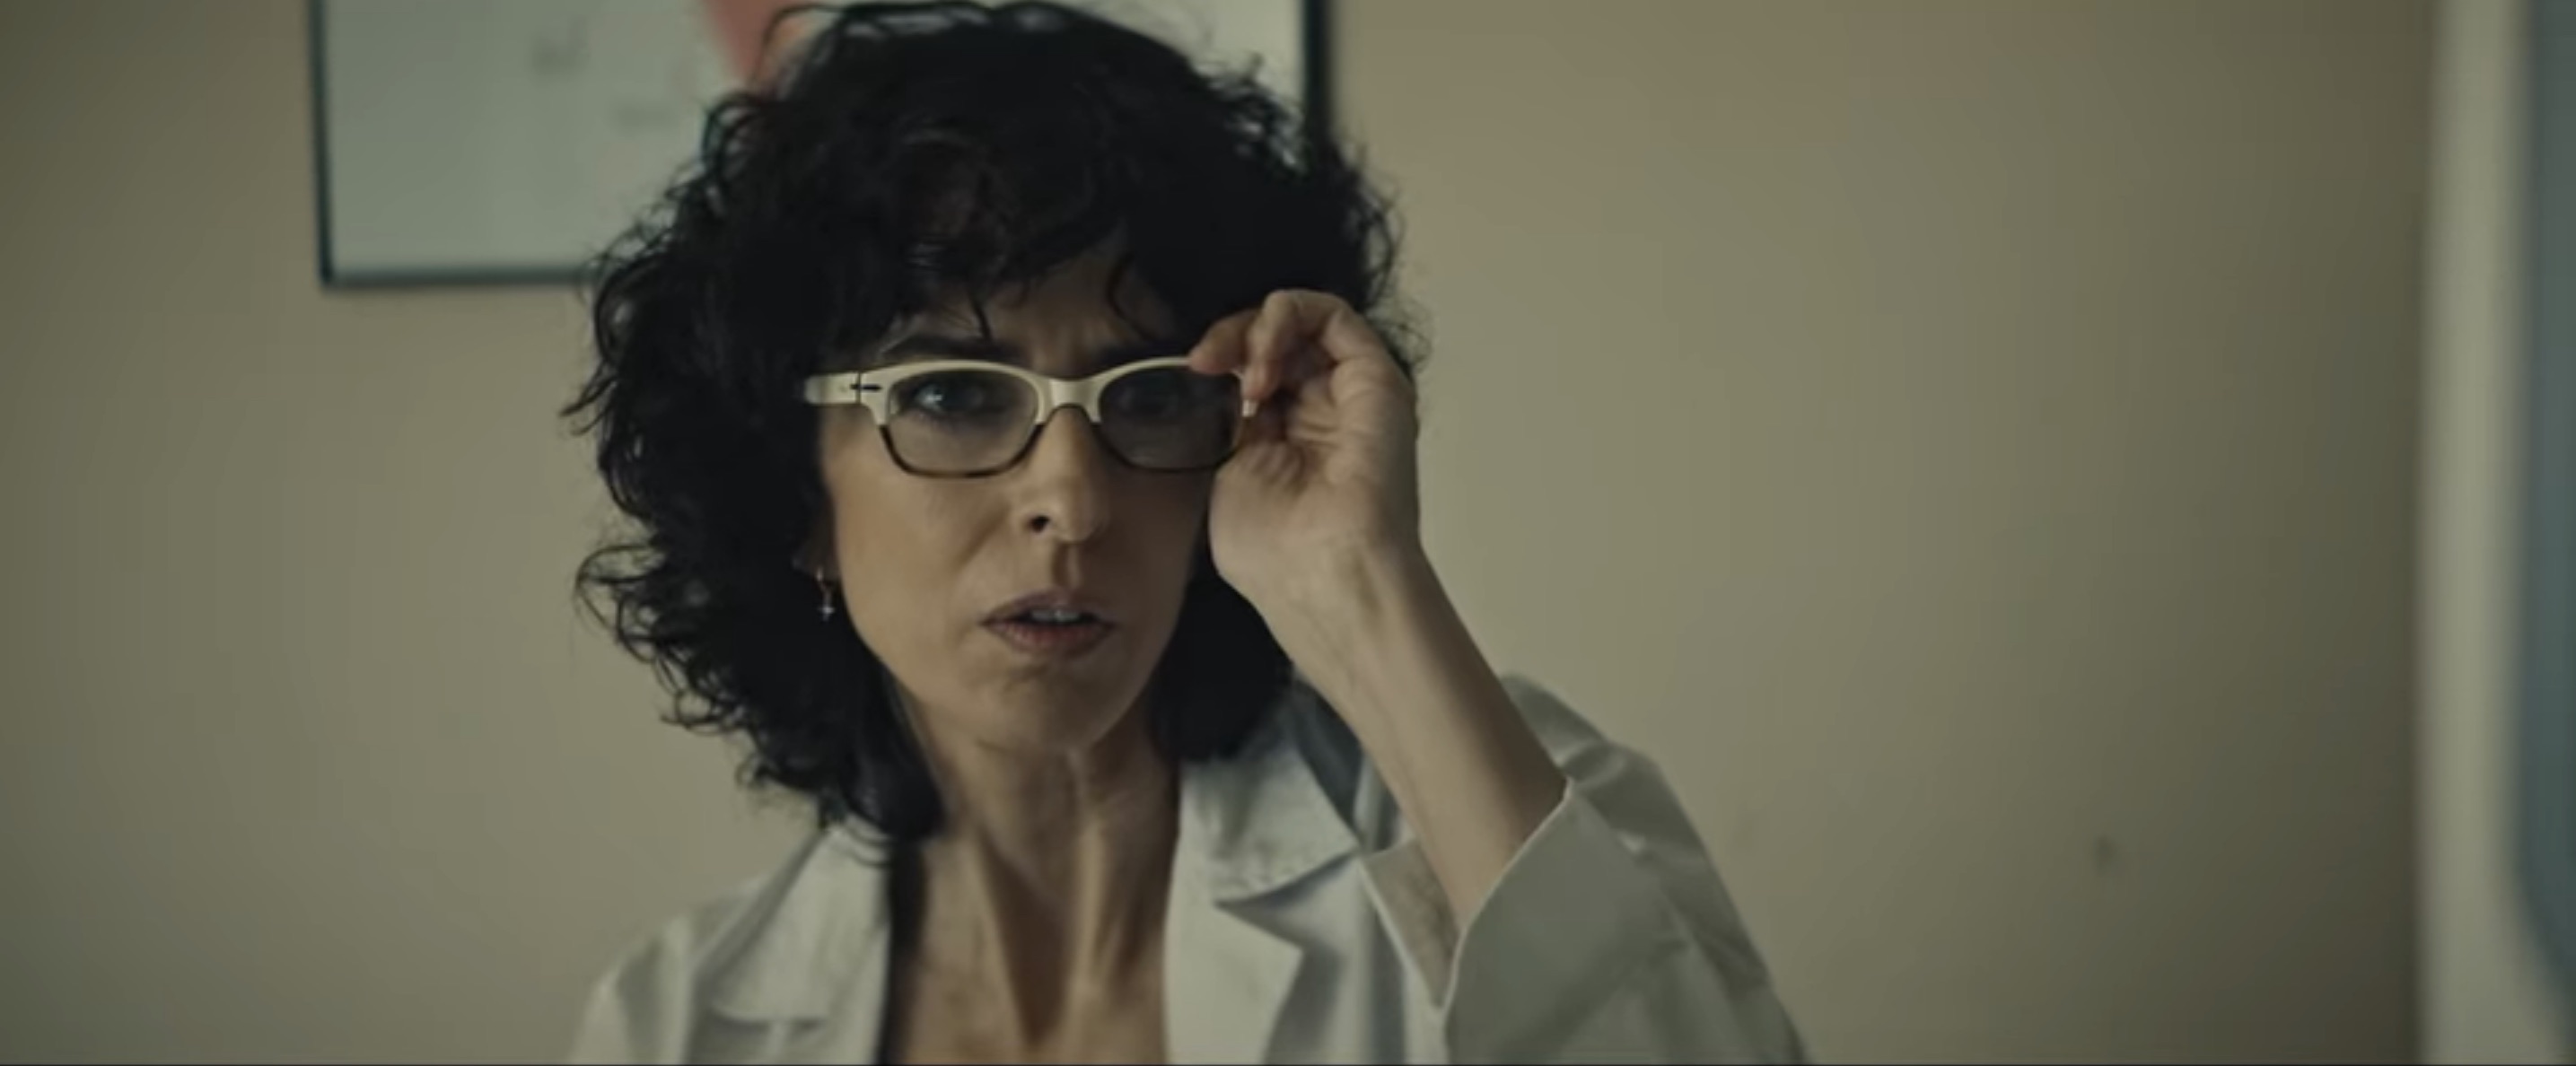 Under Her Control Cast on Netflix - Vanesa Rasero as Cristina